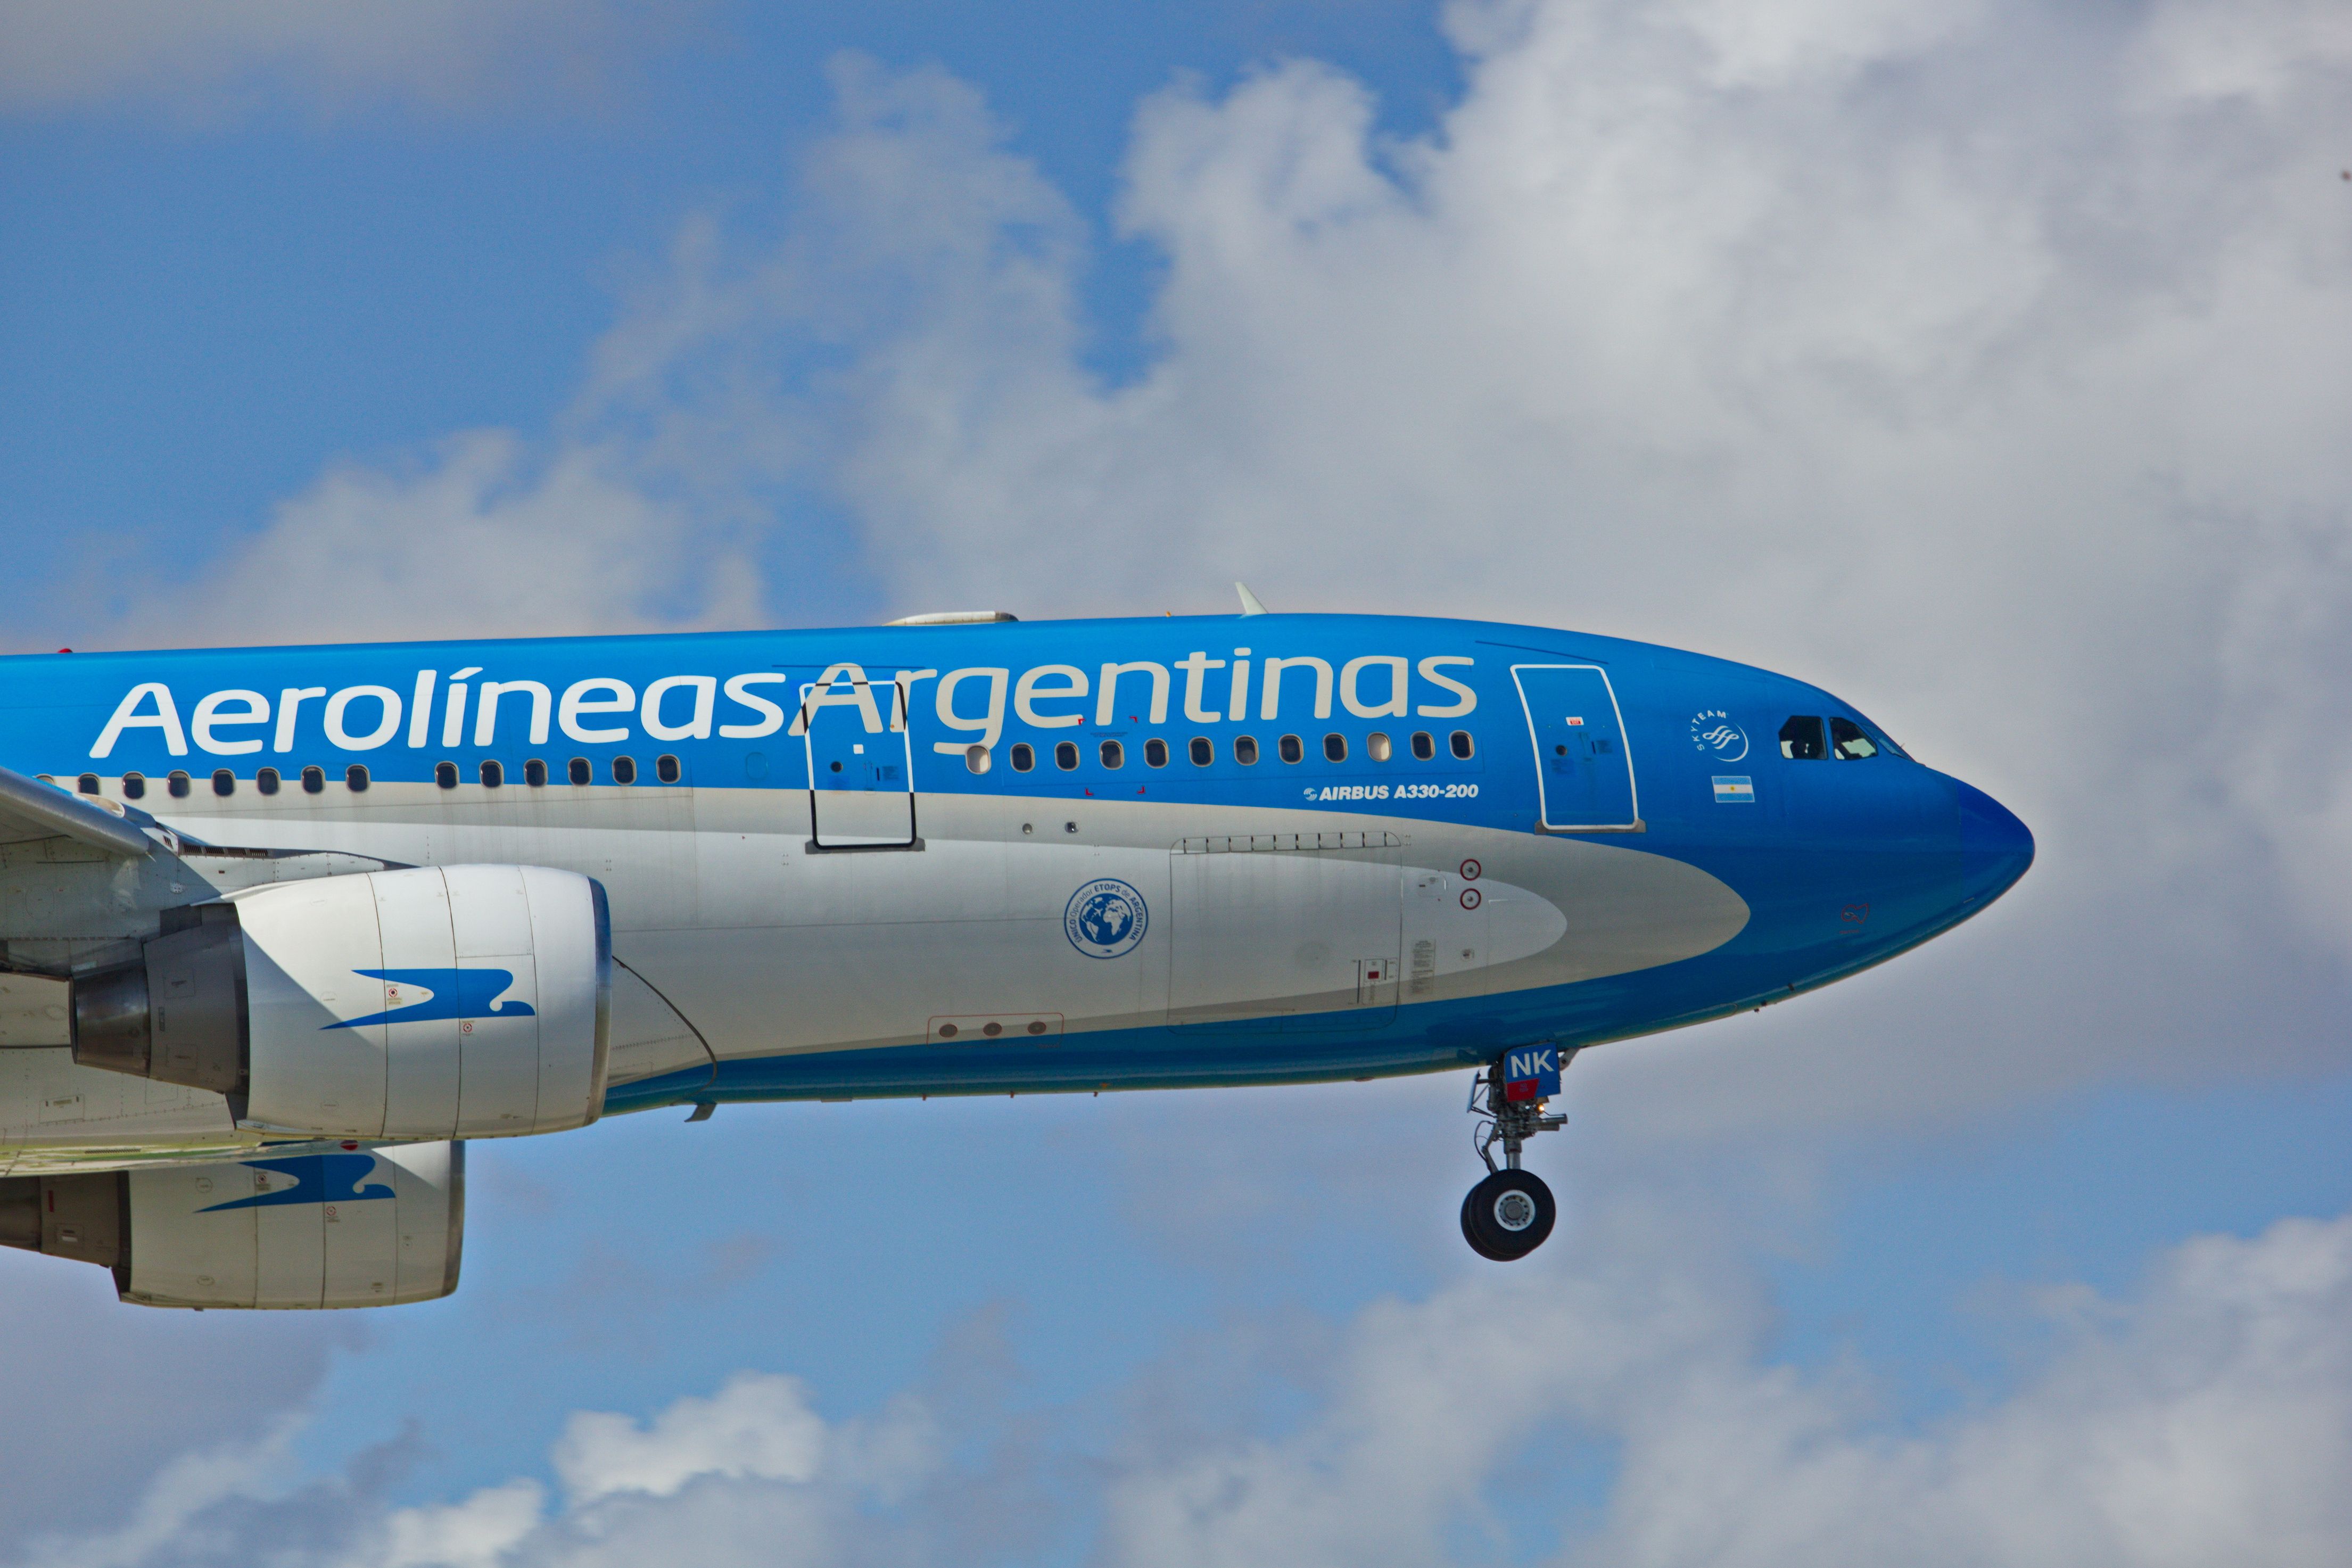 Aerolineas Argentinas Airbus 330 on final at MIA 